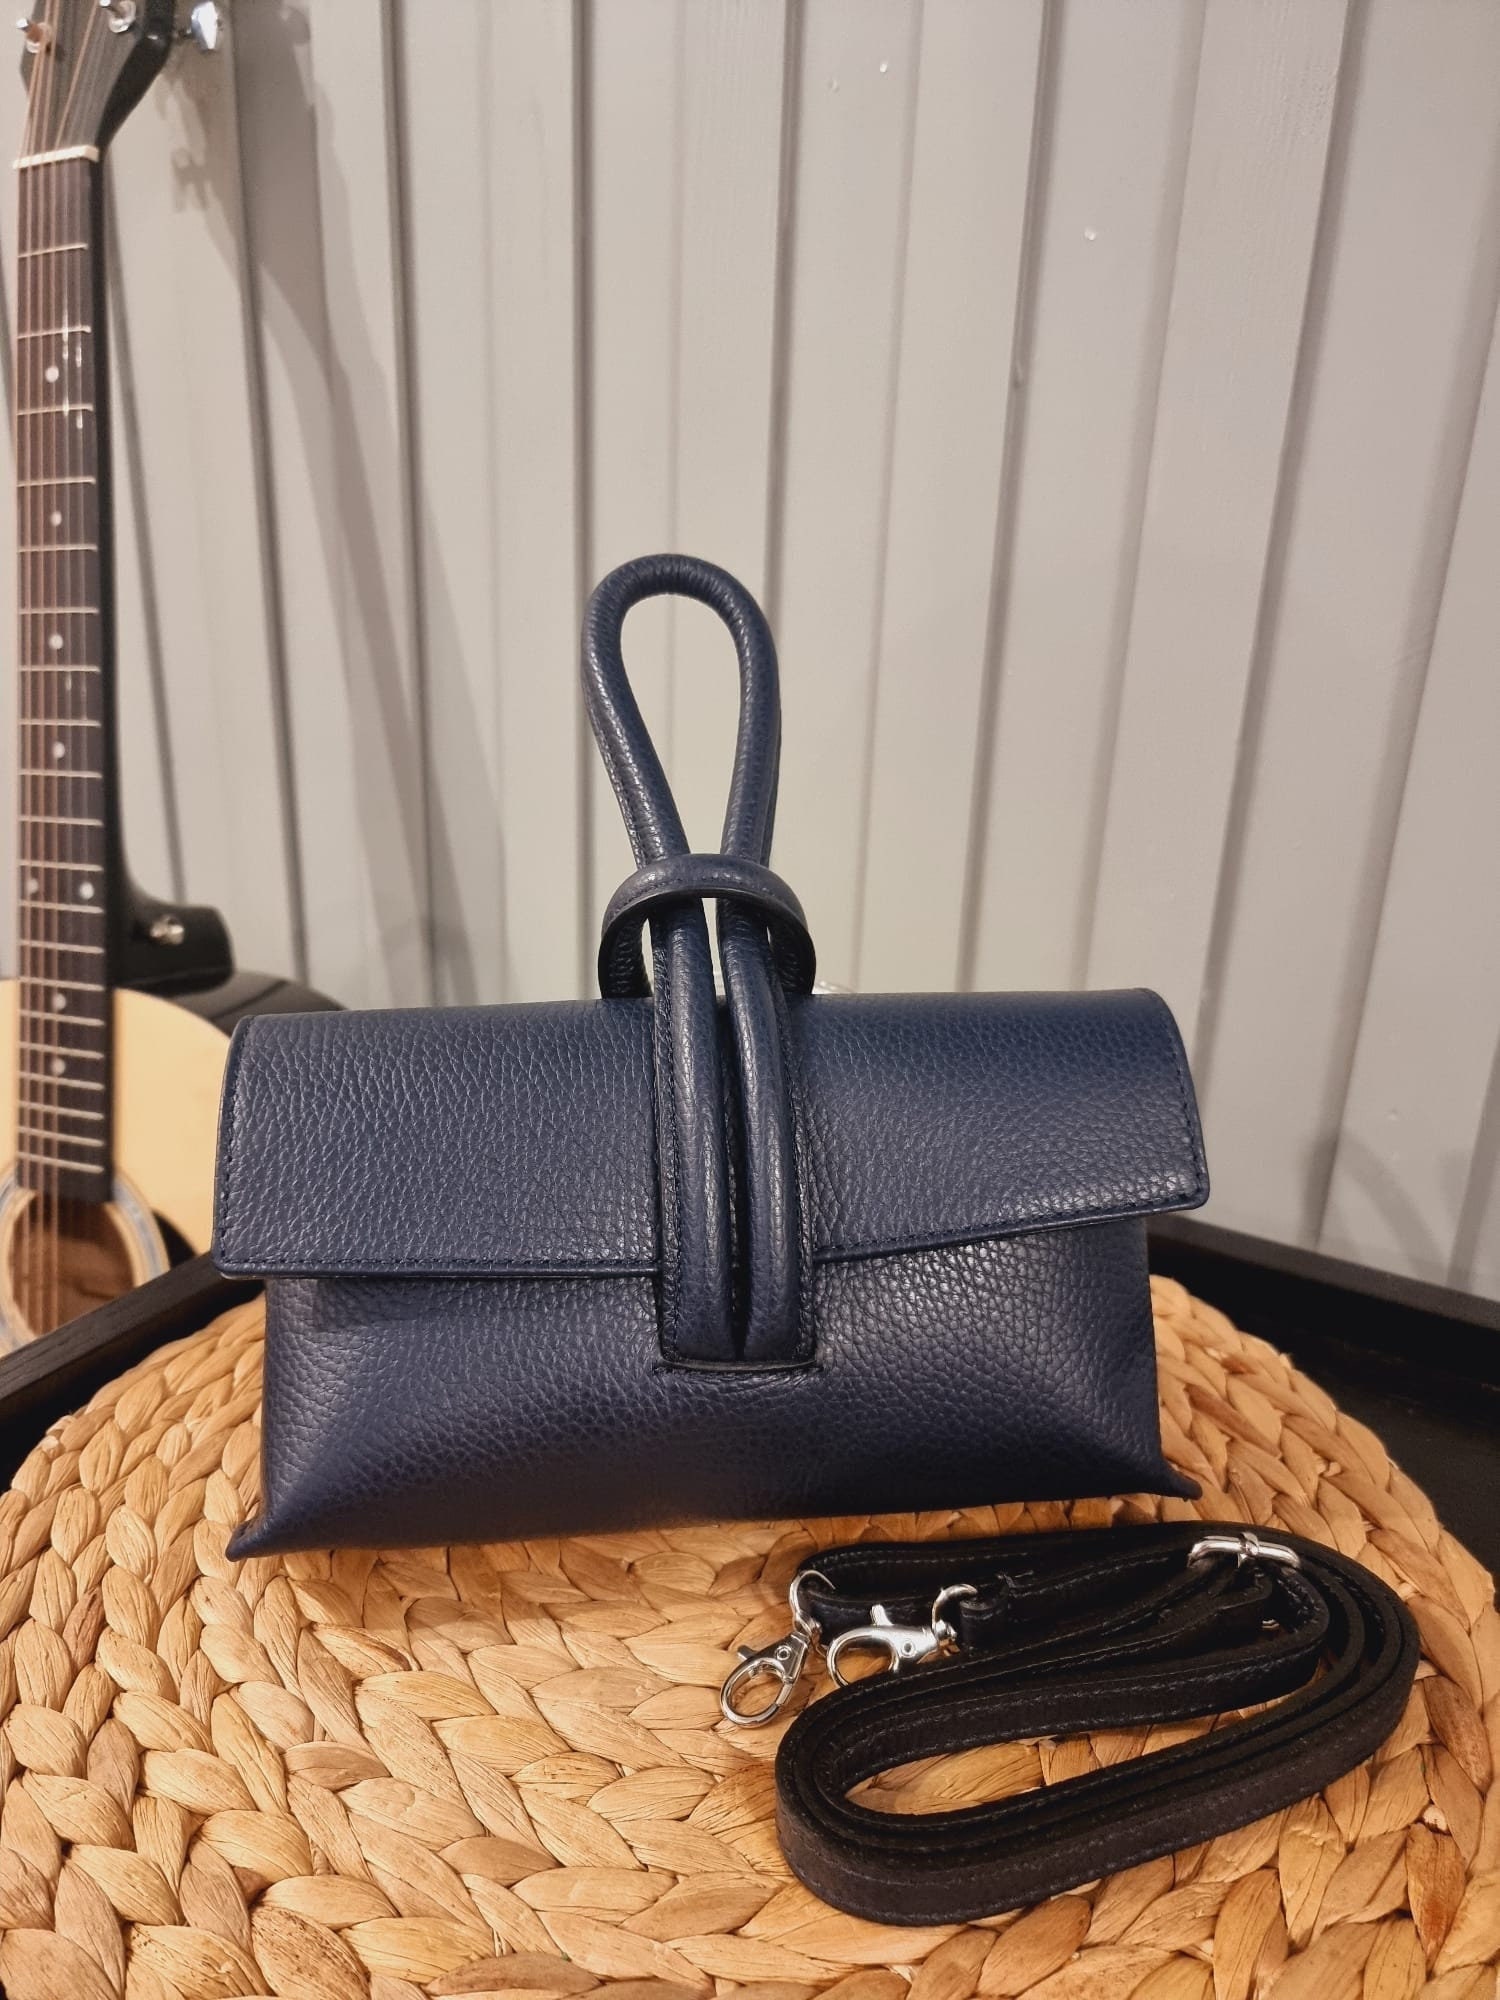 Guitar Strap Handbag, Guitar Strap Purse, Crossbody Strap, Adjustable Strap  Bag, Accessory Bag, Shoulder Strap Purse, purse NOT Included 